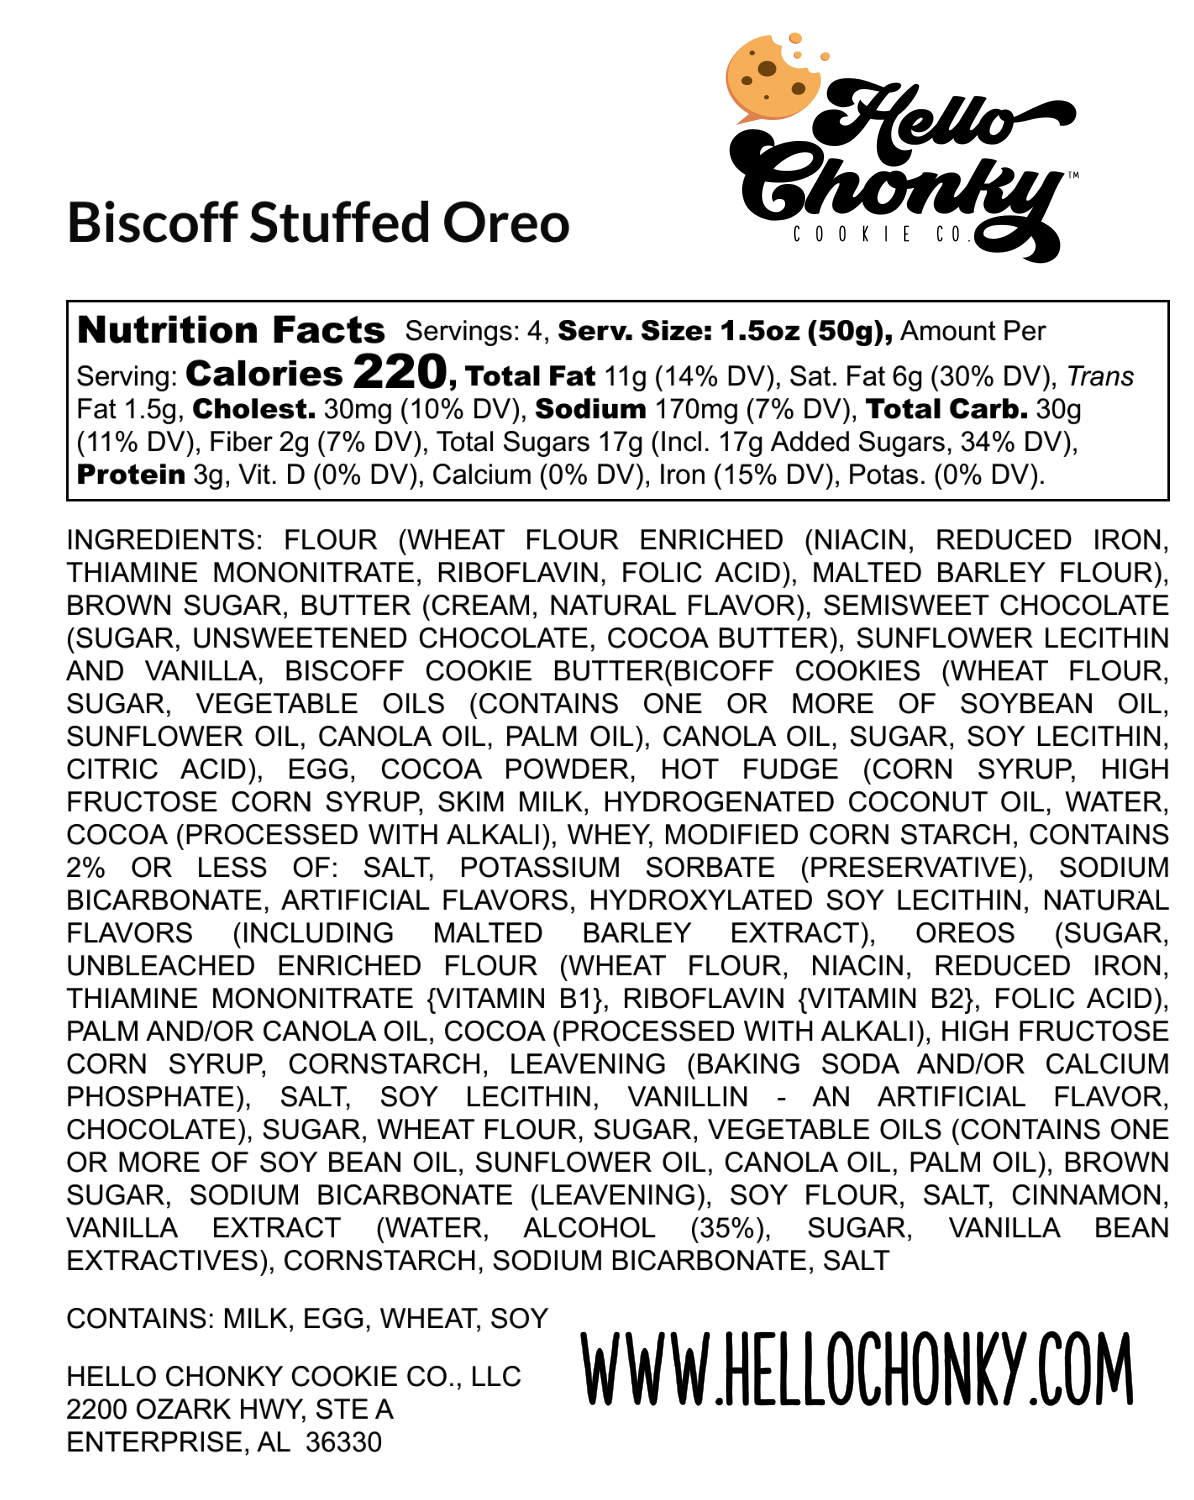 Biscoff Stuffed Black Chocolate with Oreo